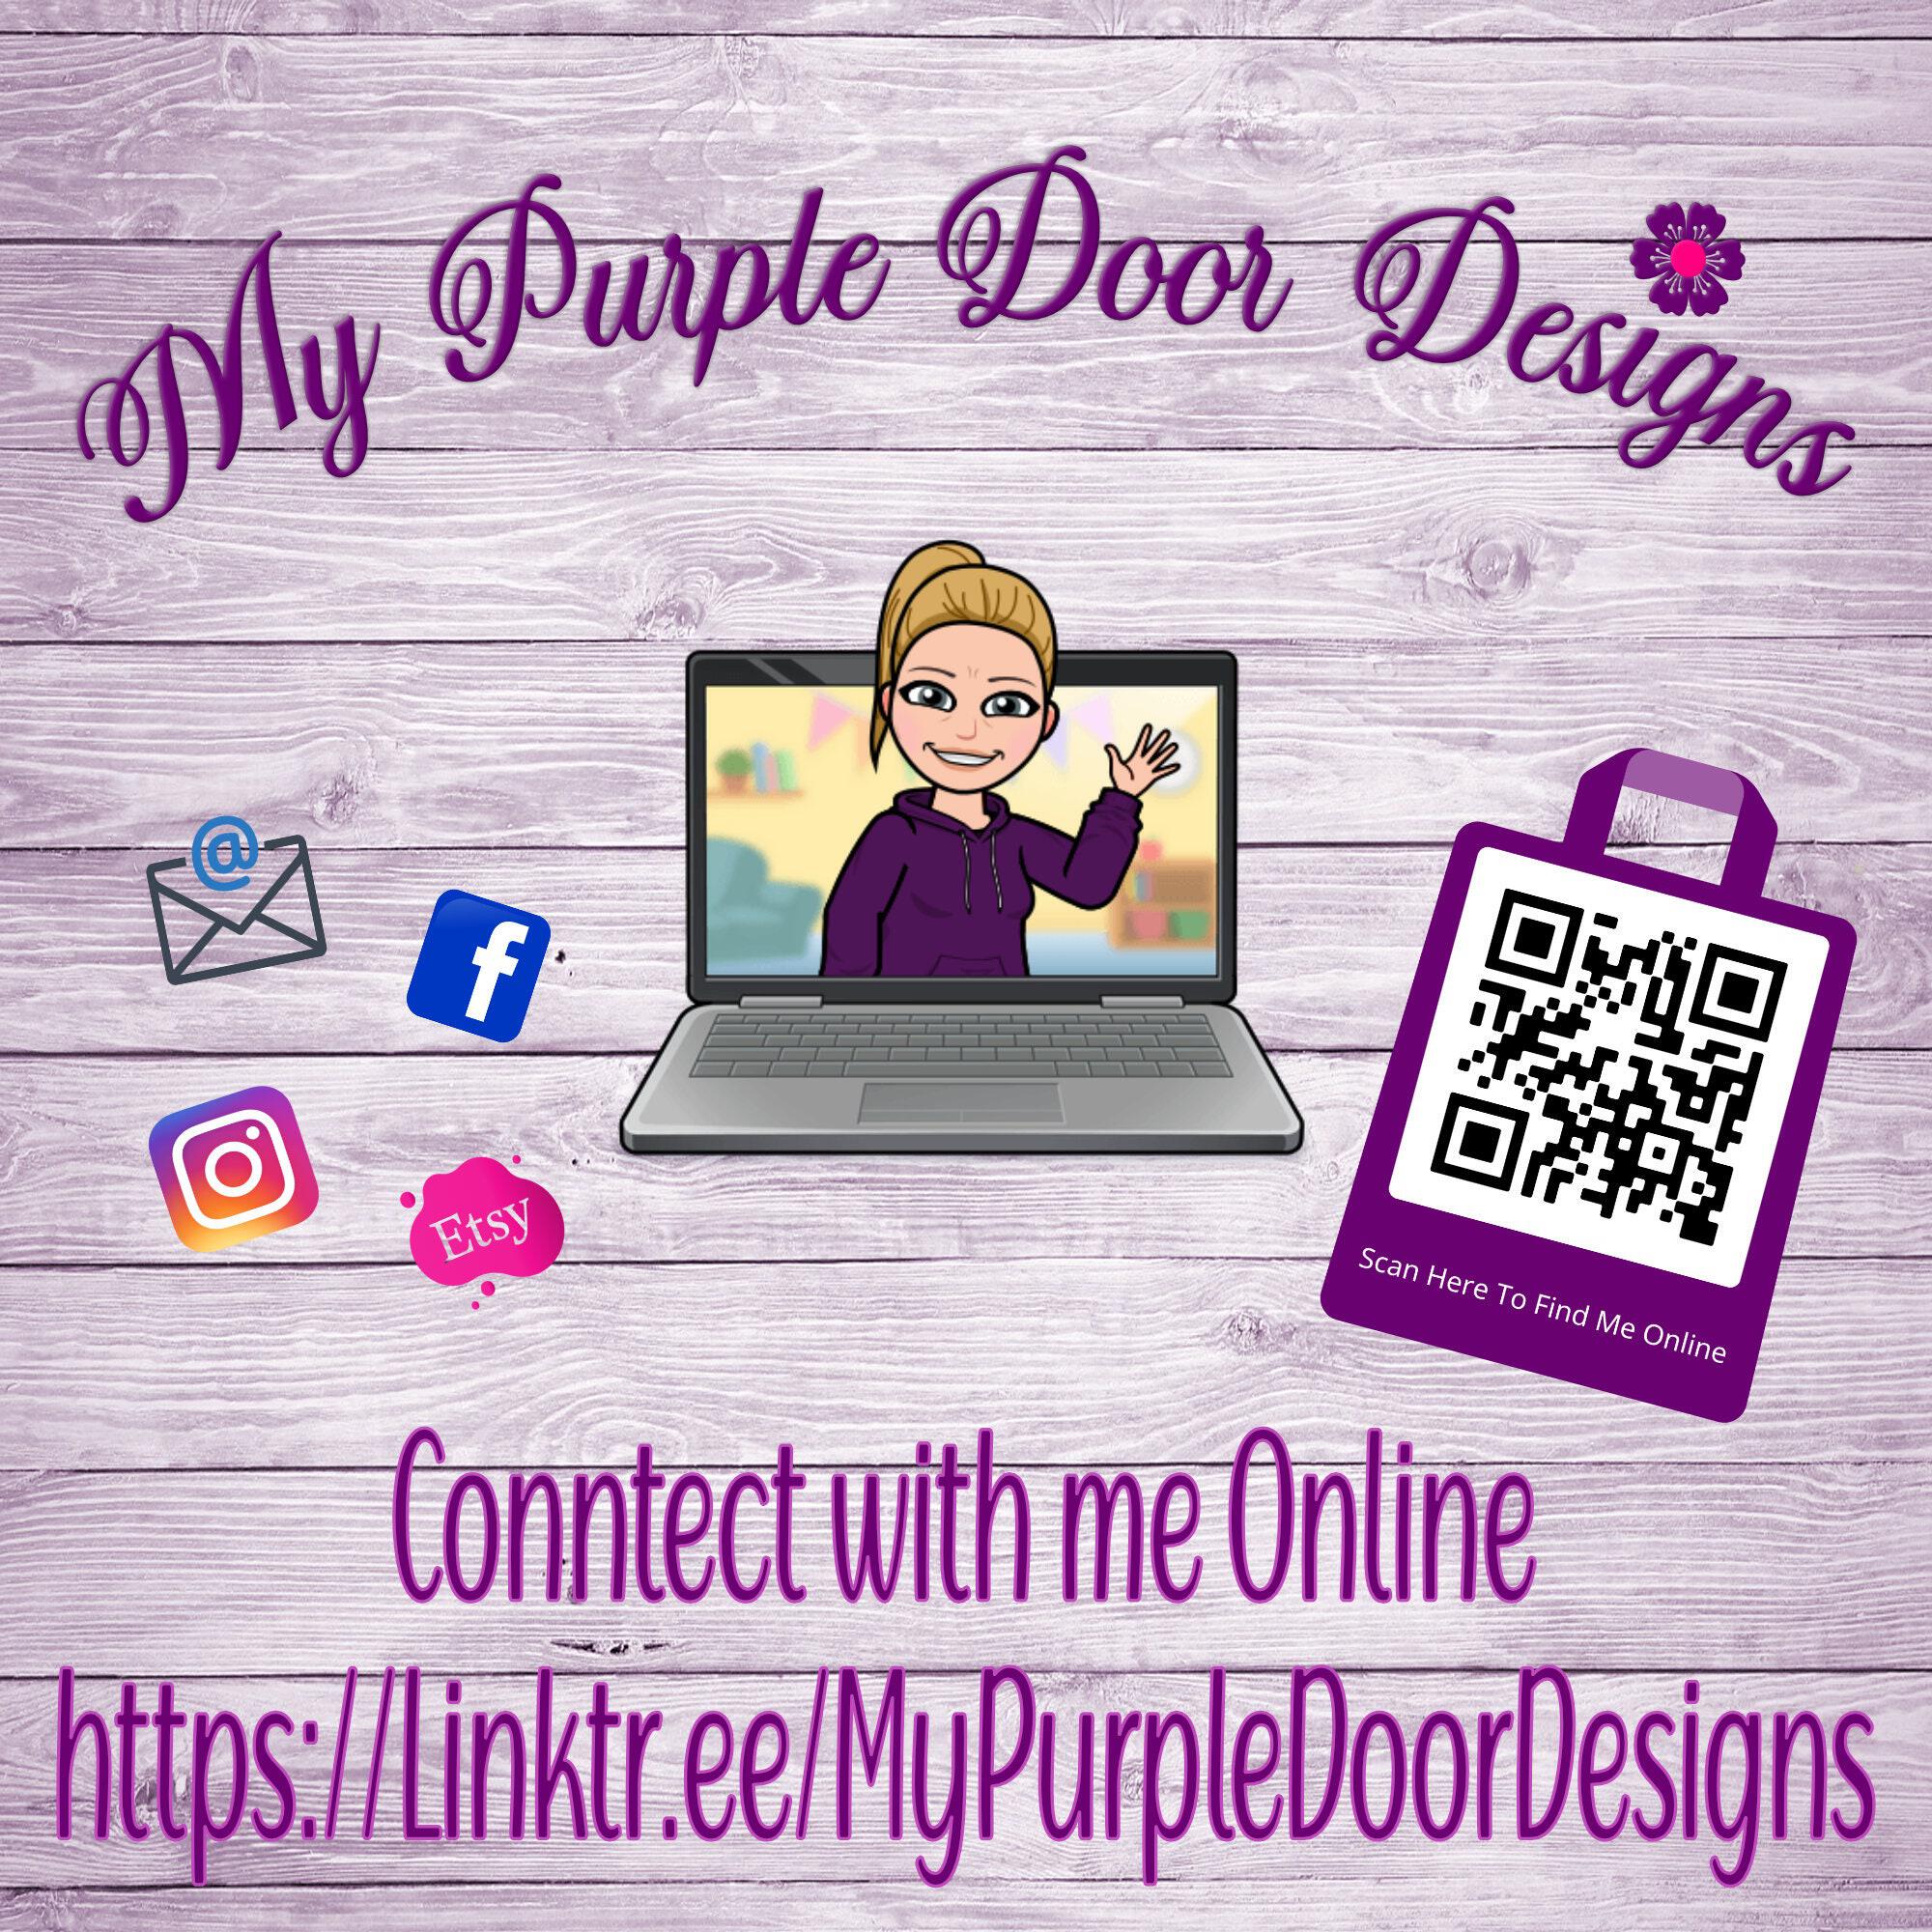 My Purple Door Designs - Envelope Seal Stickers Black & White